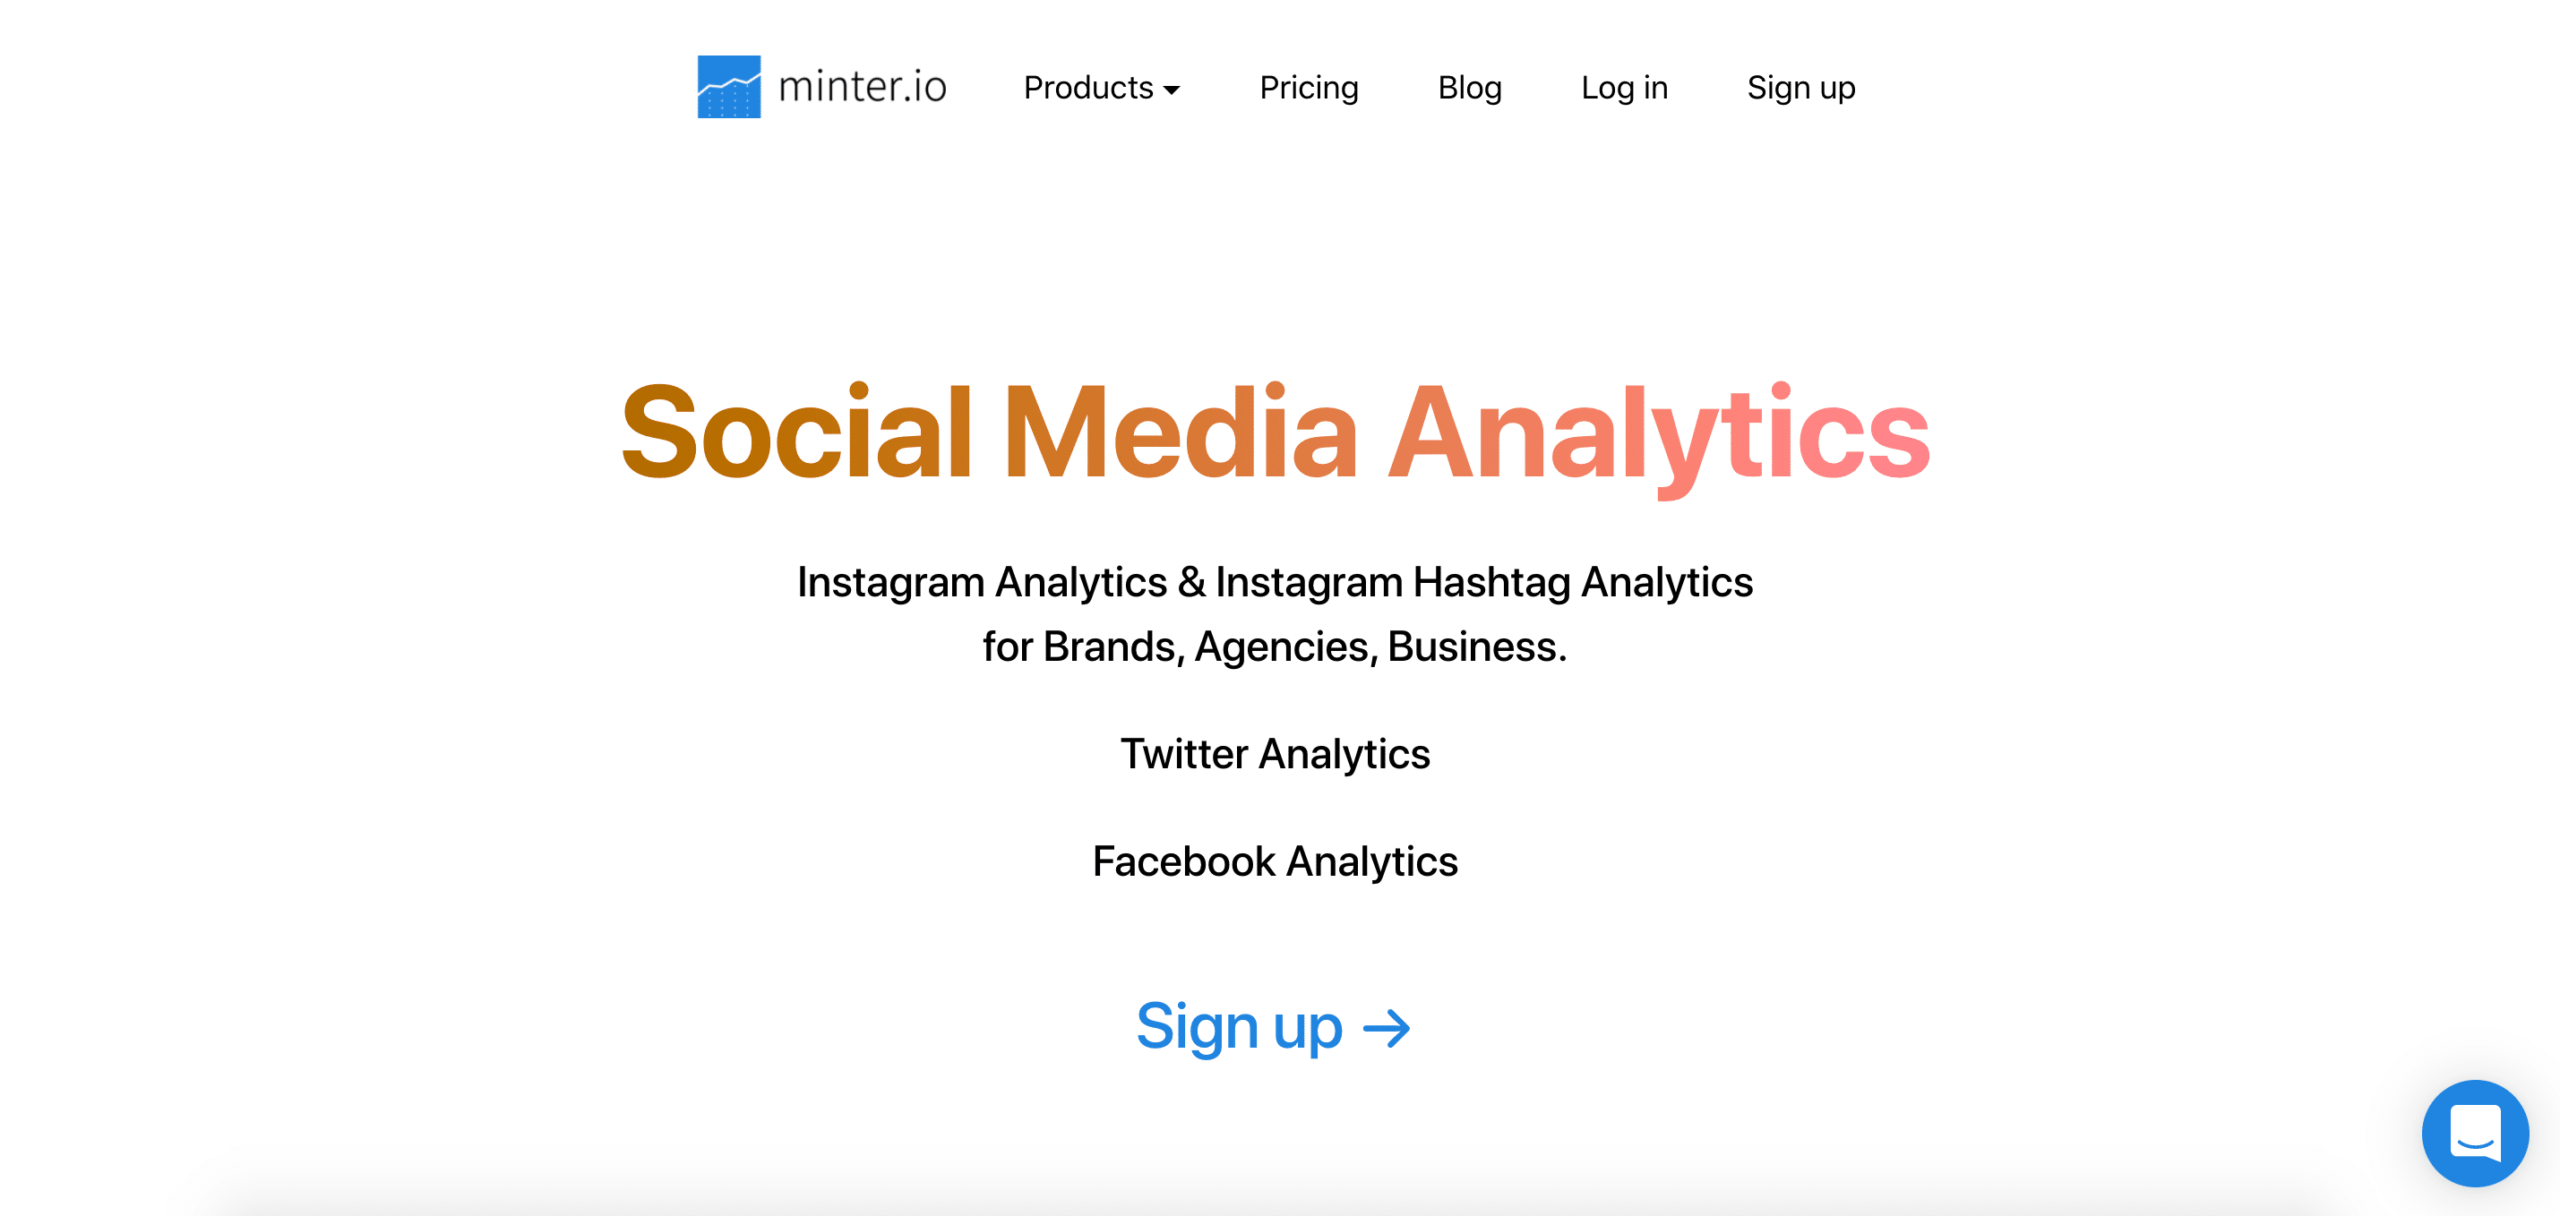 instagram analytics tool minter.io